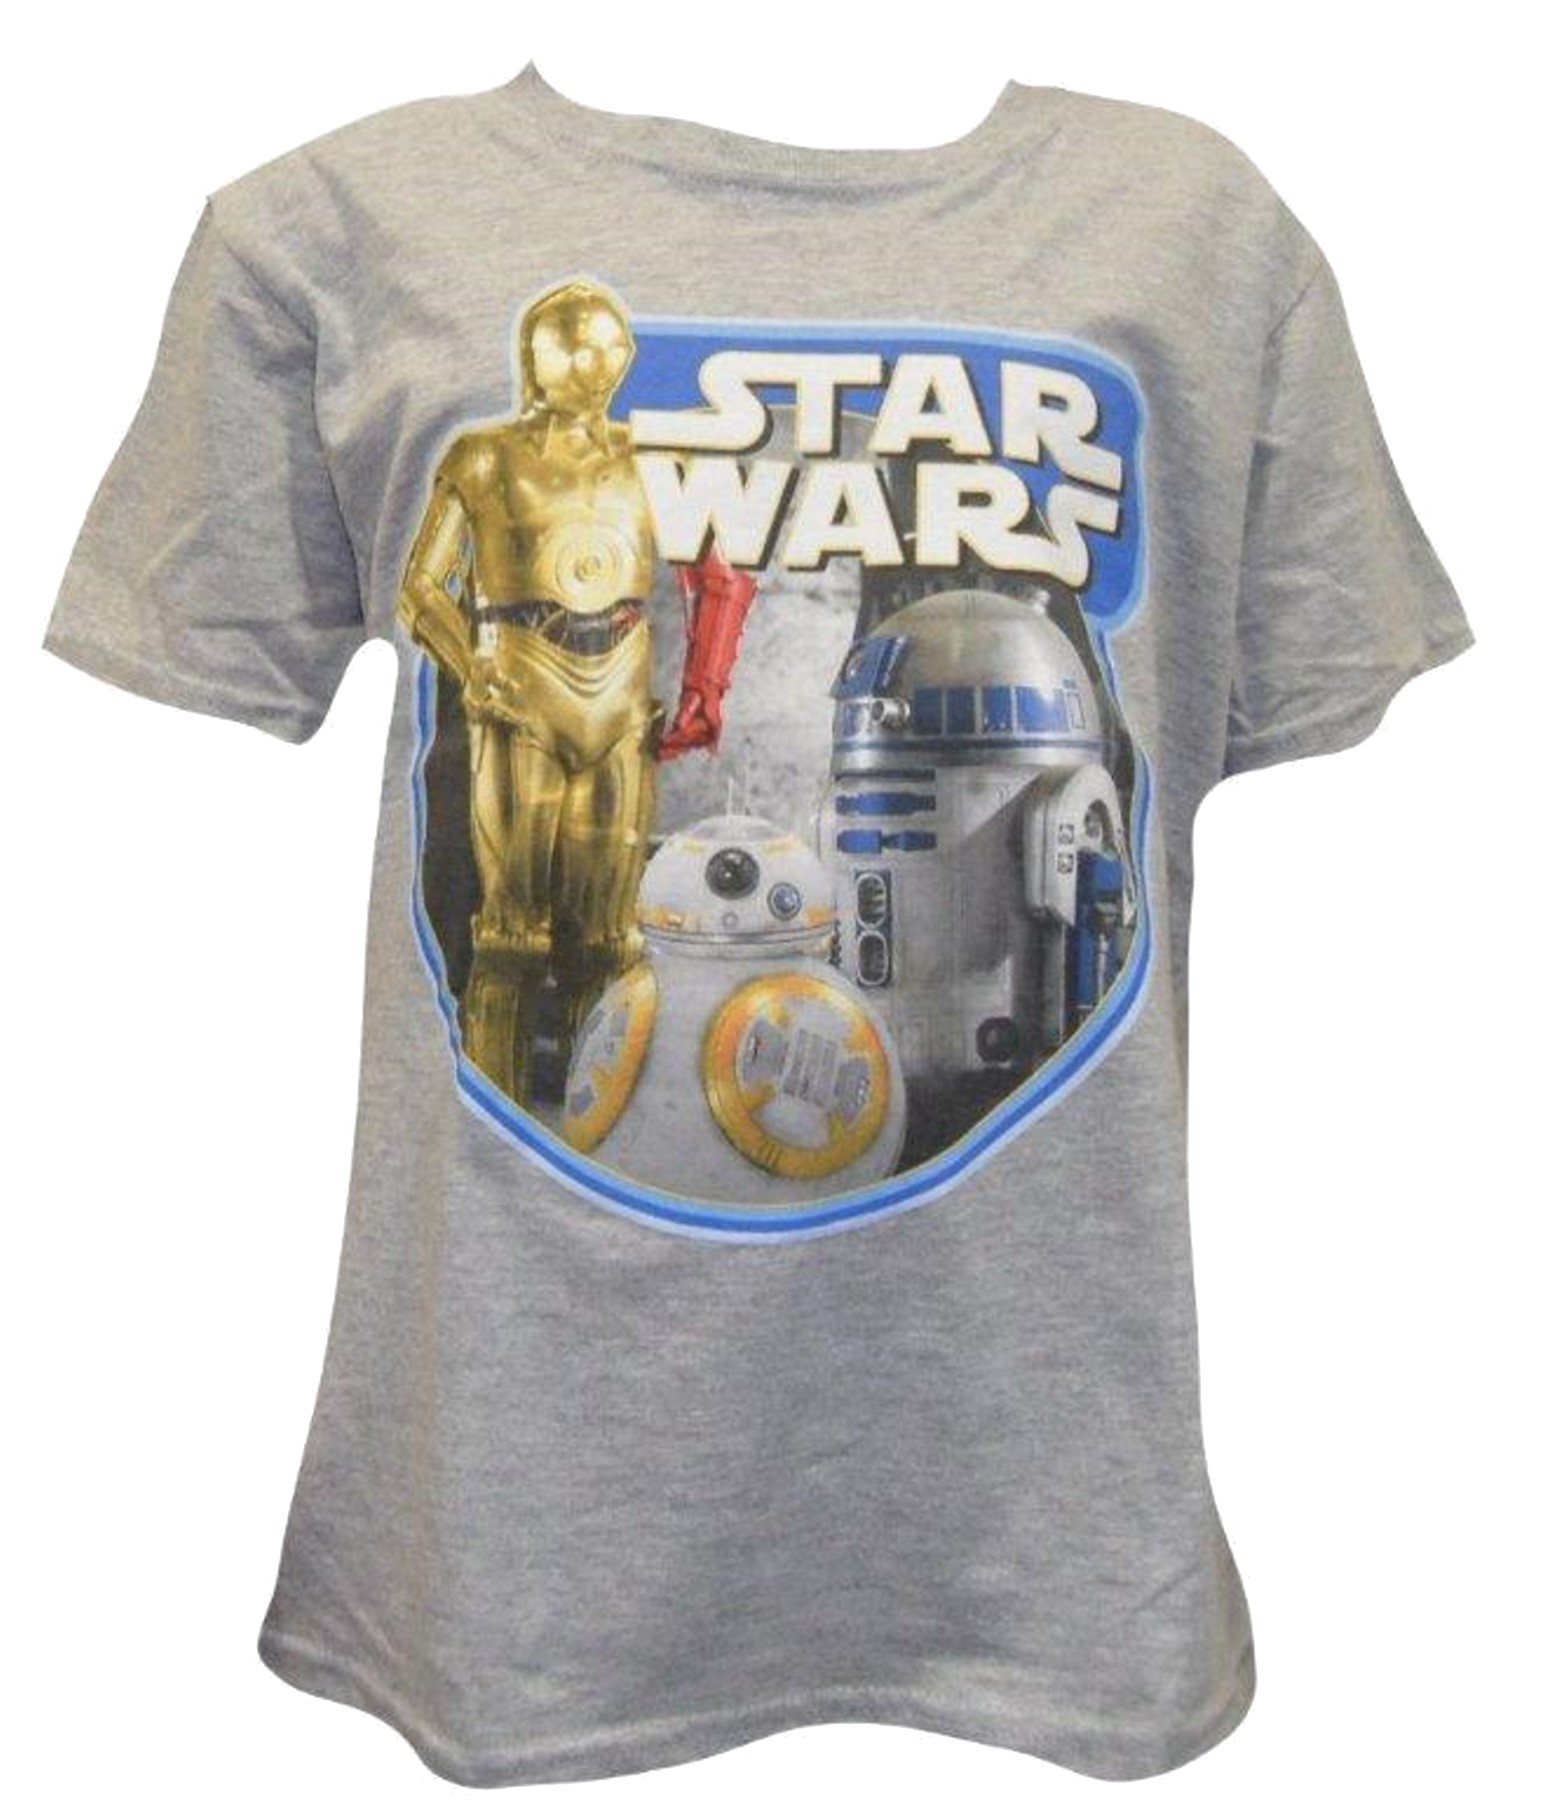 Star Wars T-shirt 23320.jpg  by Thingimijigs